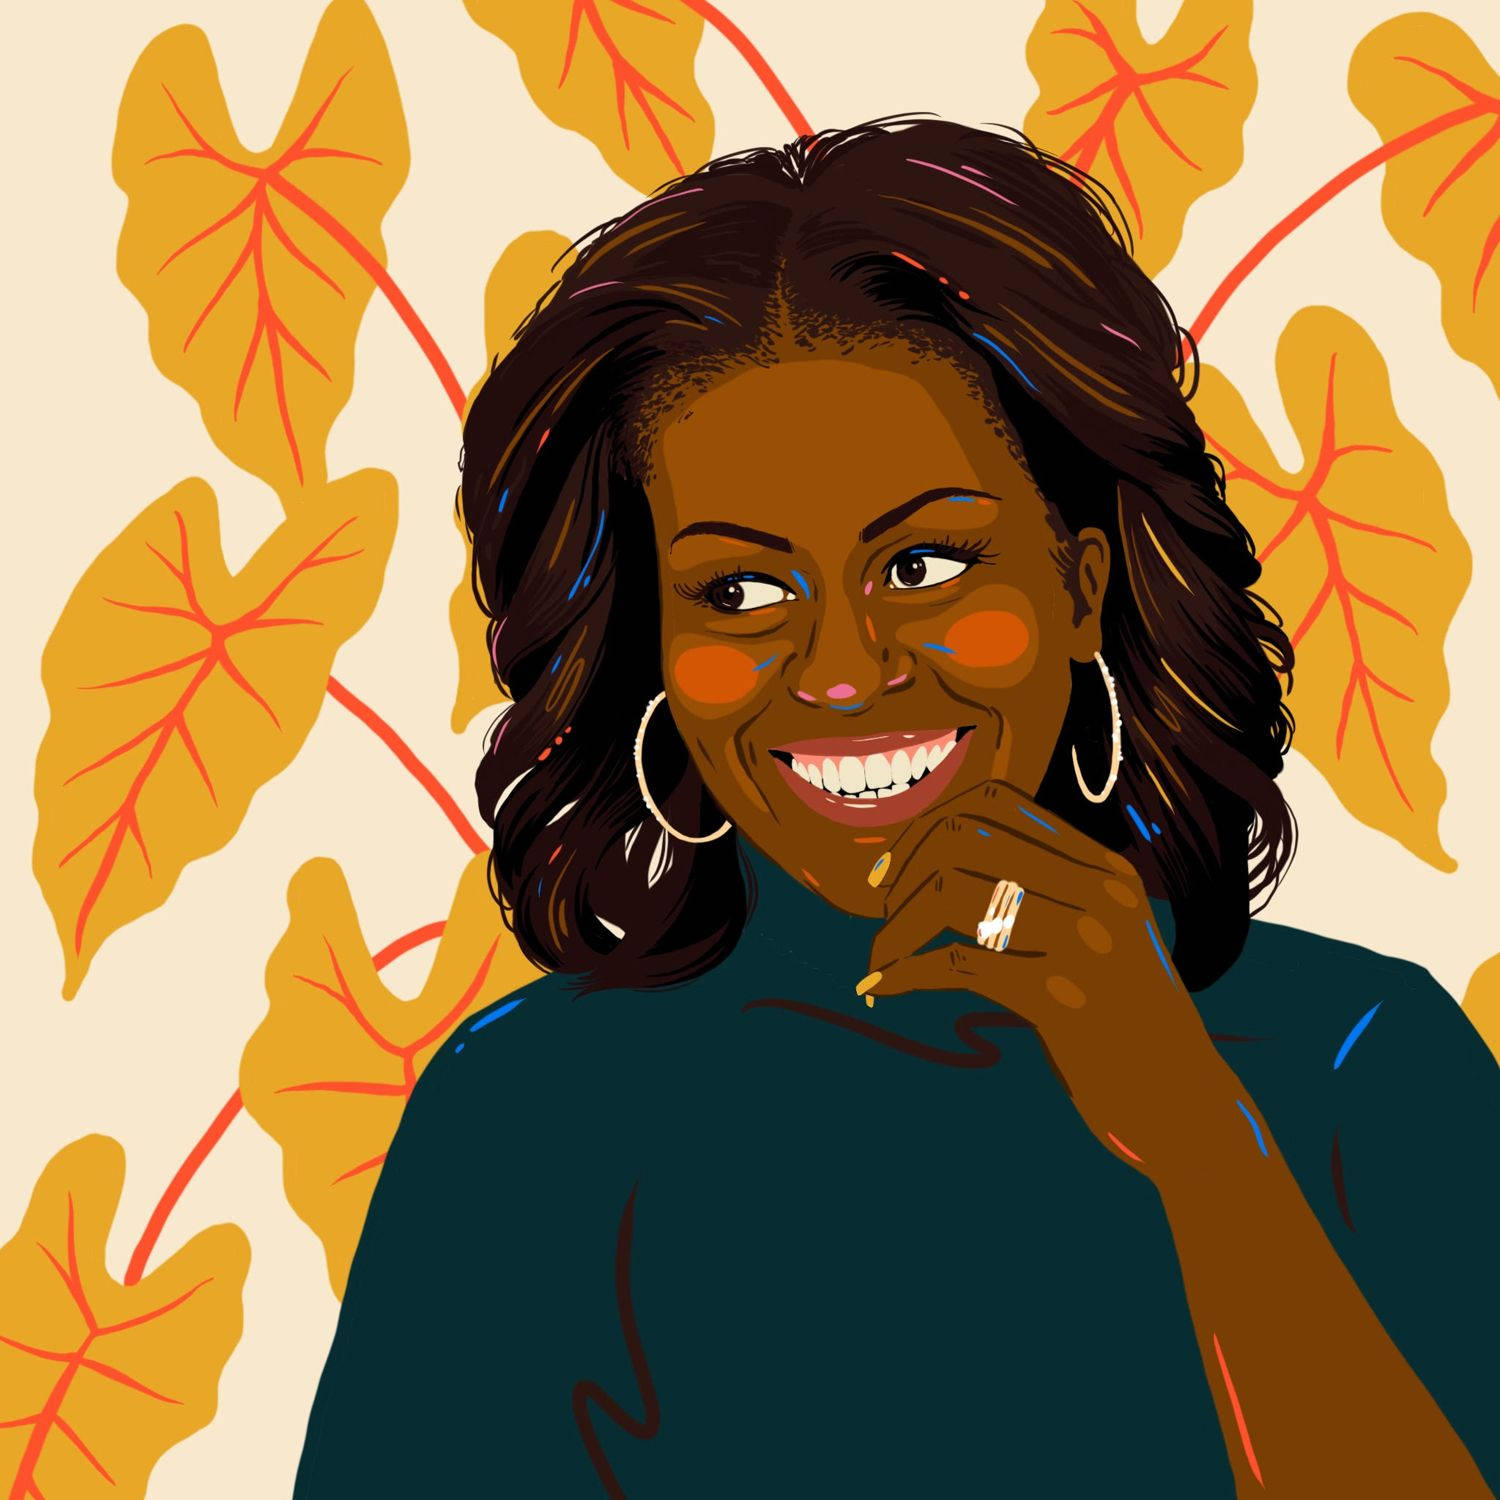 Michelle Obama Digital Art Background